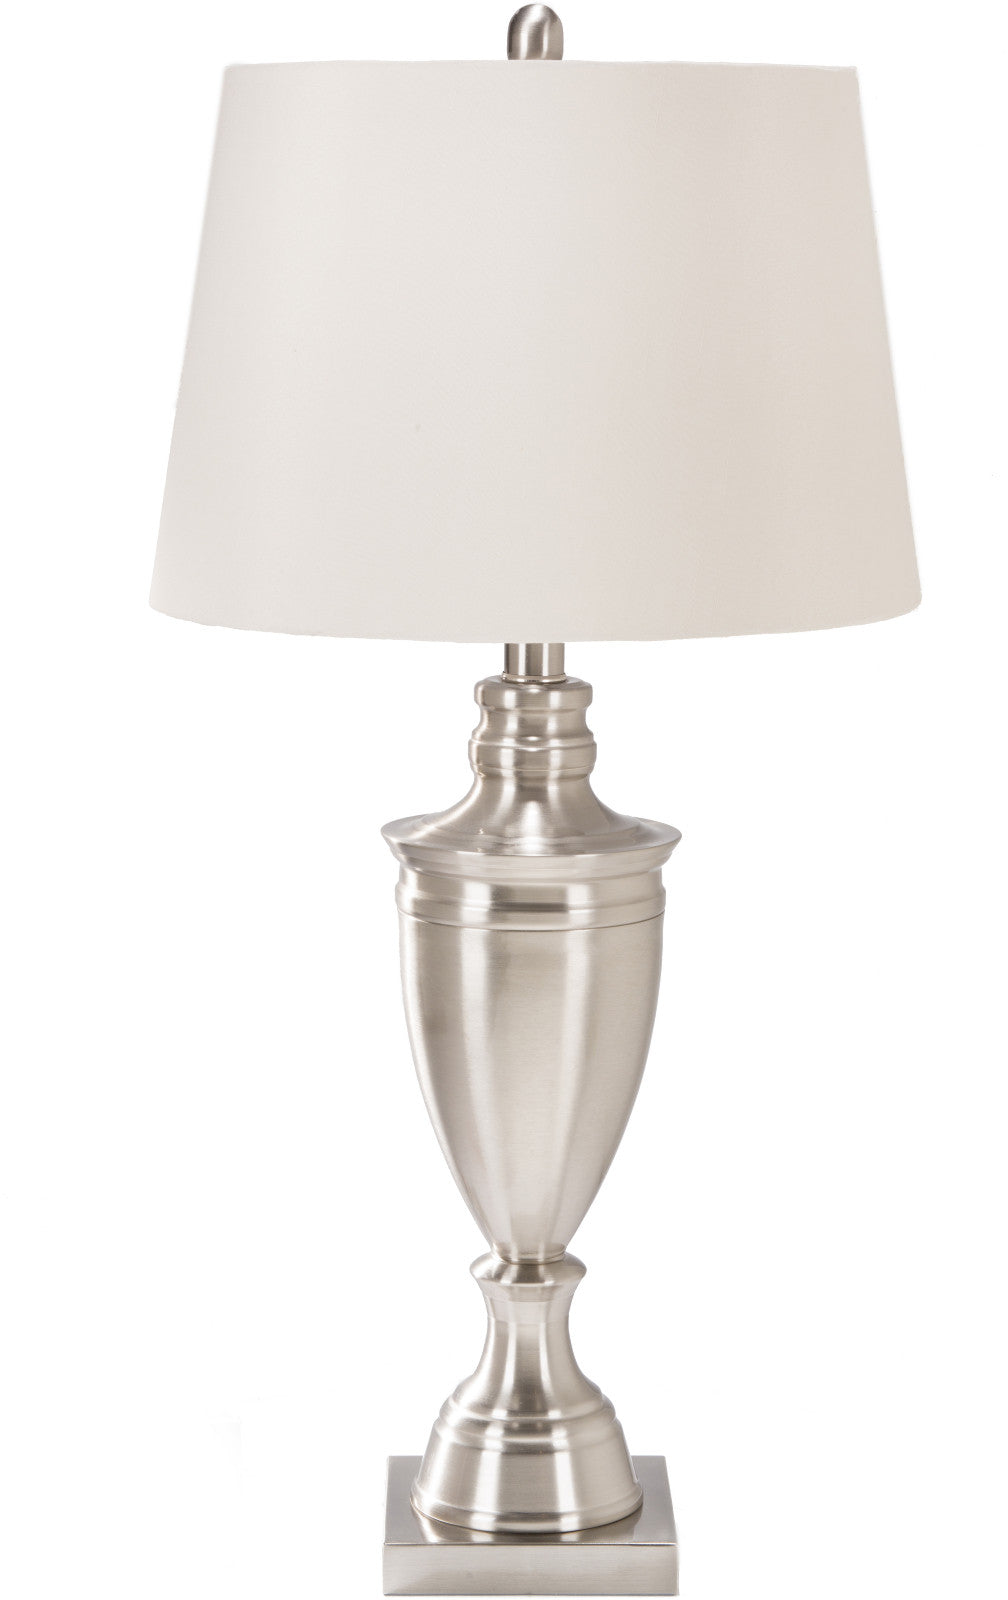 Surya Natalie NTLP-001 Off-white Lamp Table Lamp